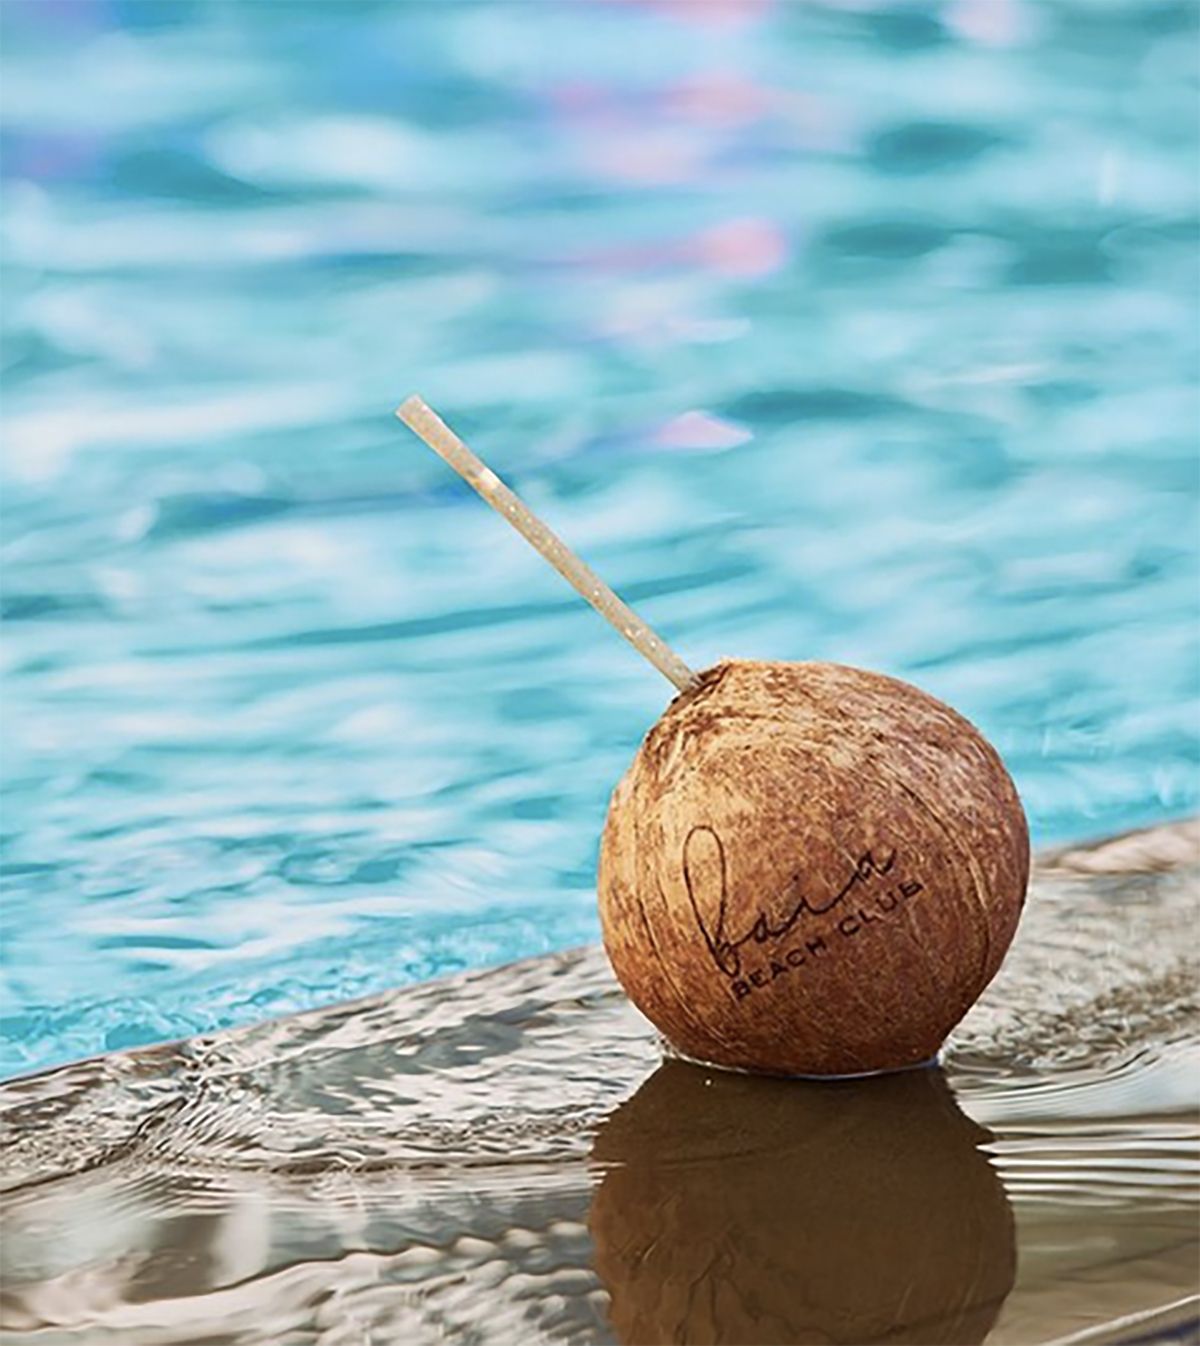 Coconut drink poolside